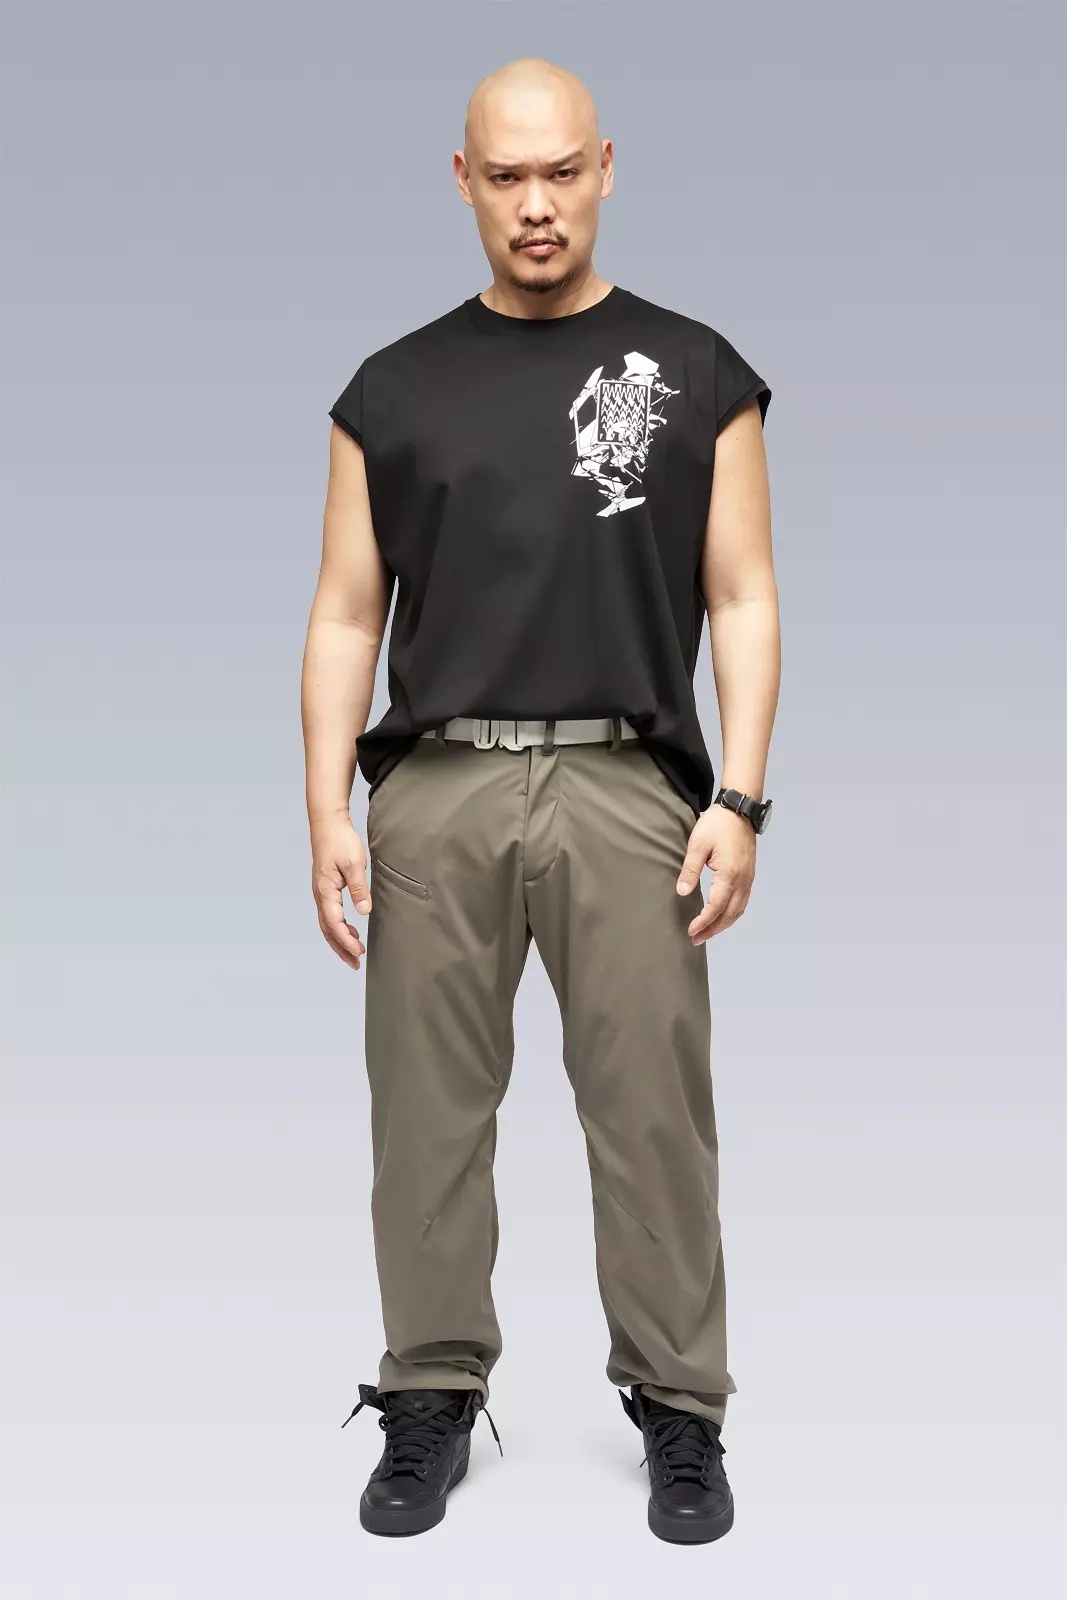 S25-PR-B 100% Cotton Mercerized Sleeveless T-shirt Black - 1